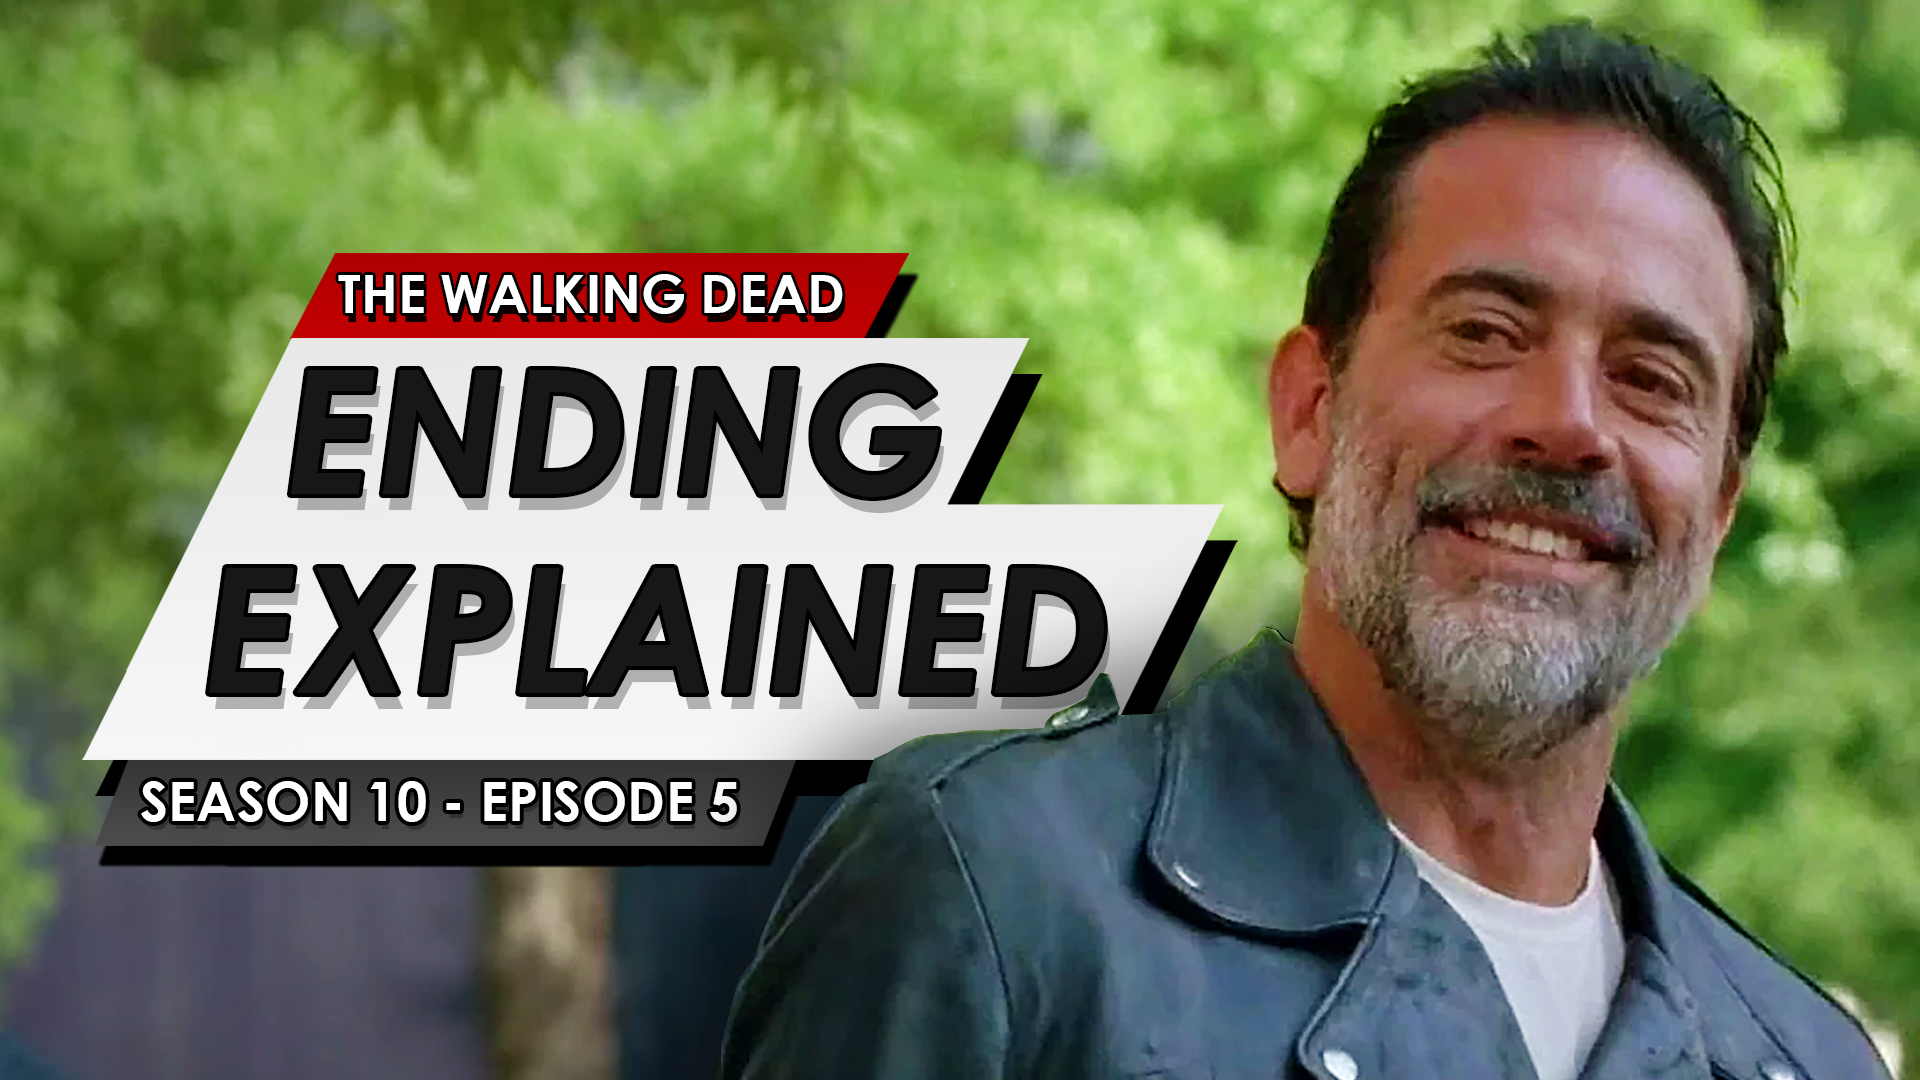 the walking dead season 10 episode 5 ending explained full breakdown spoiler talk review and recap episode 6 predictions